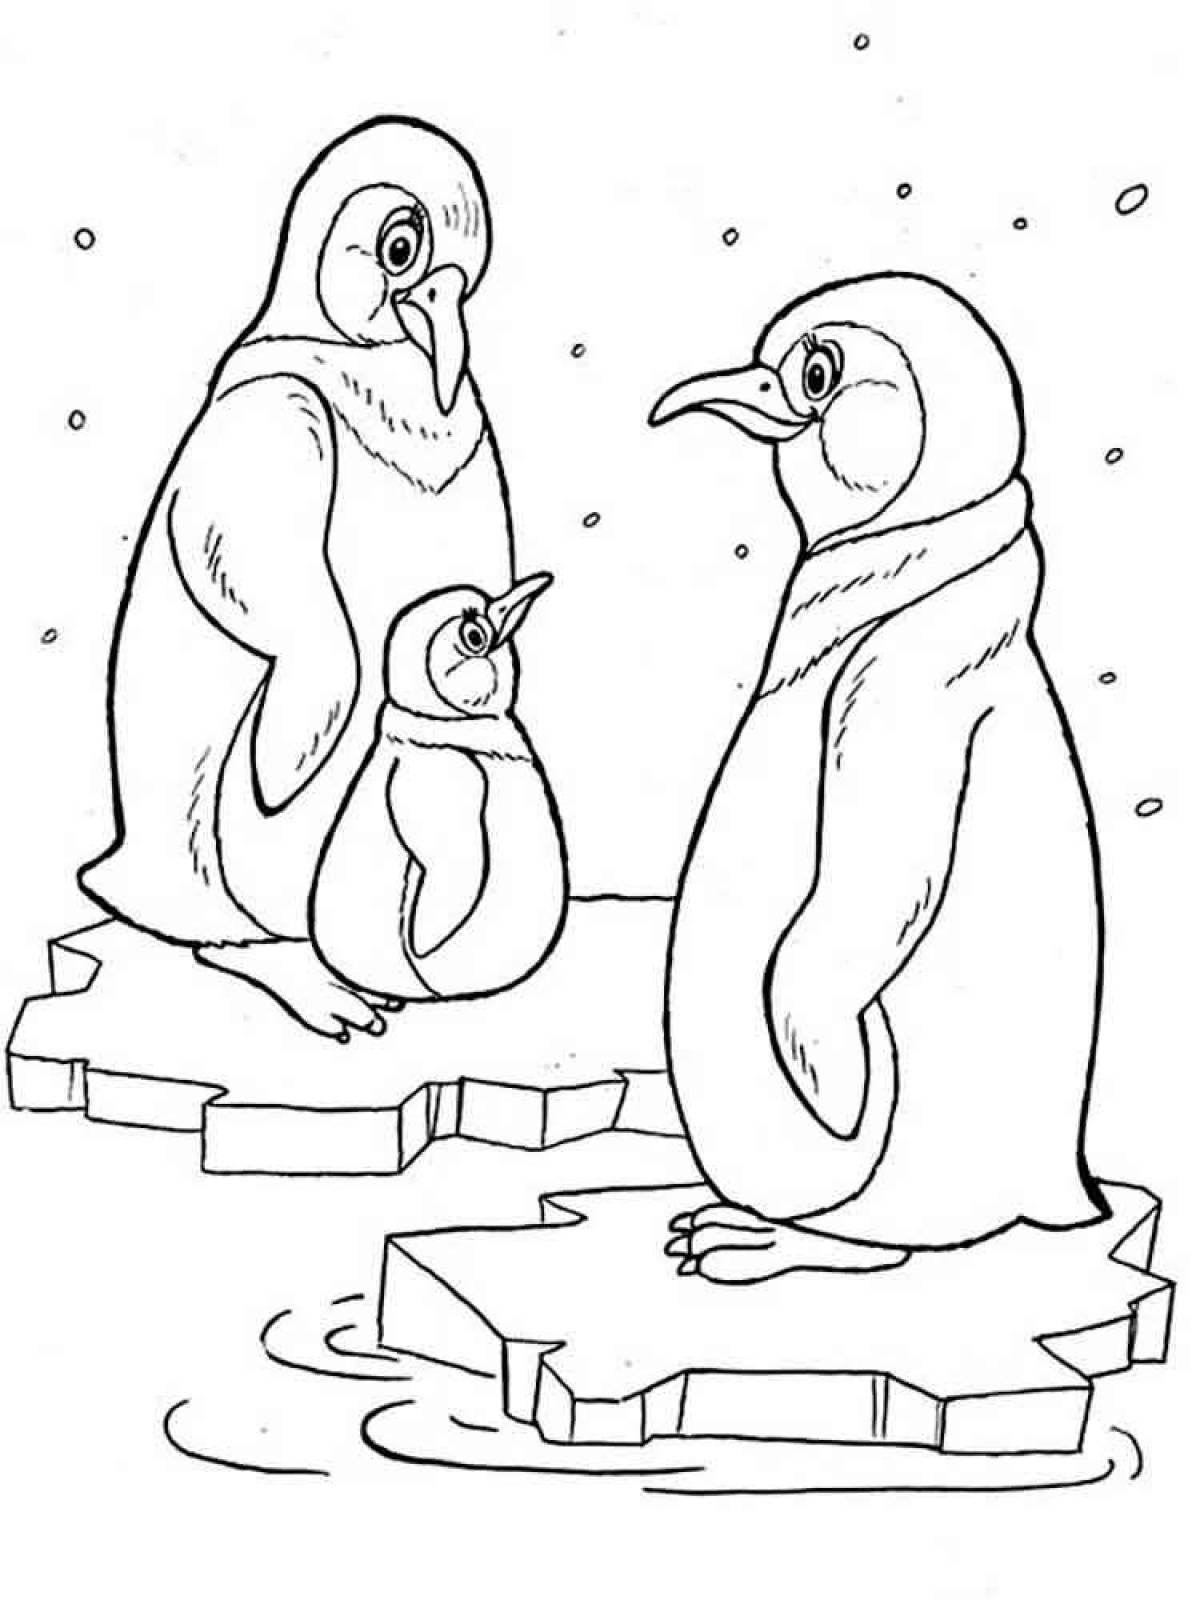 Fantastic penguin coloring book for kids